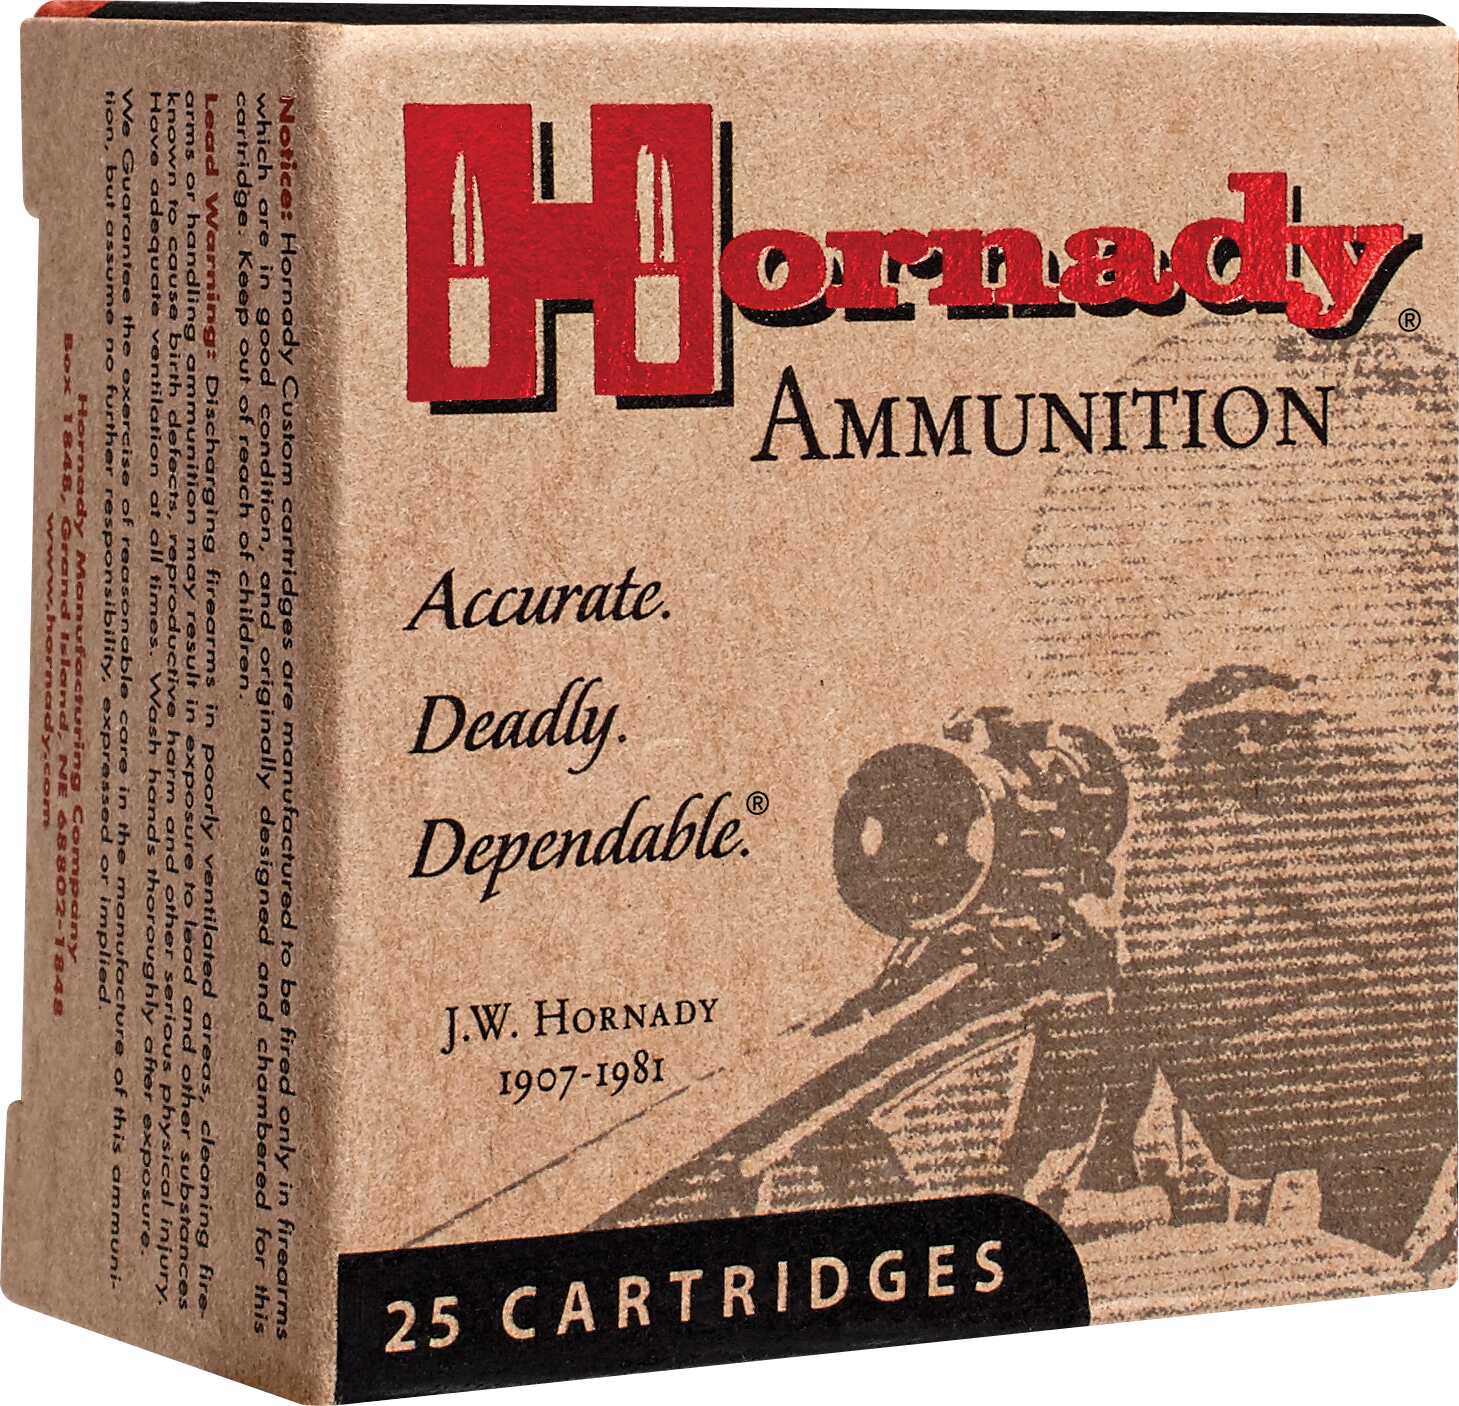 44 Rem Mag 200 Grain Hollow Point Rounds Hornady Ammunition Magnum